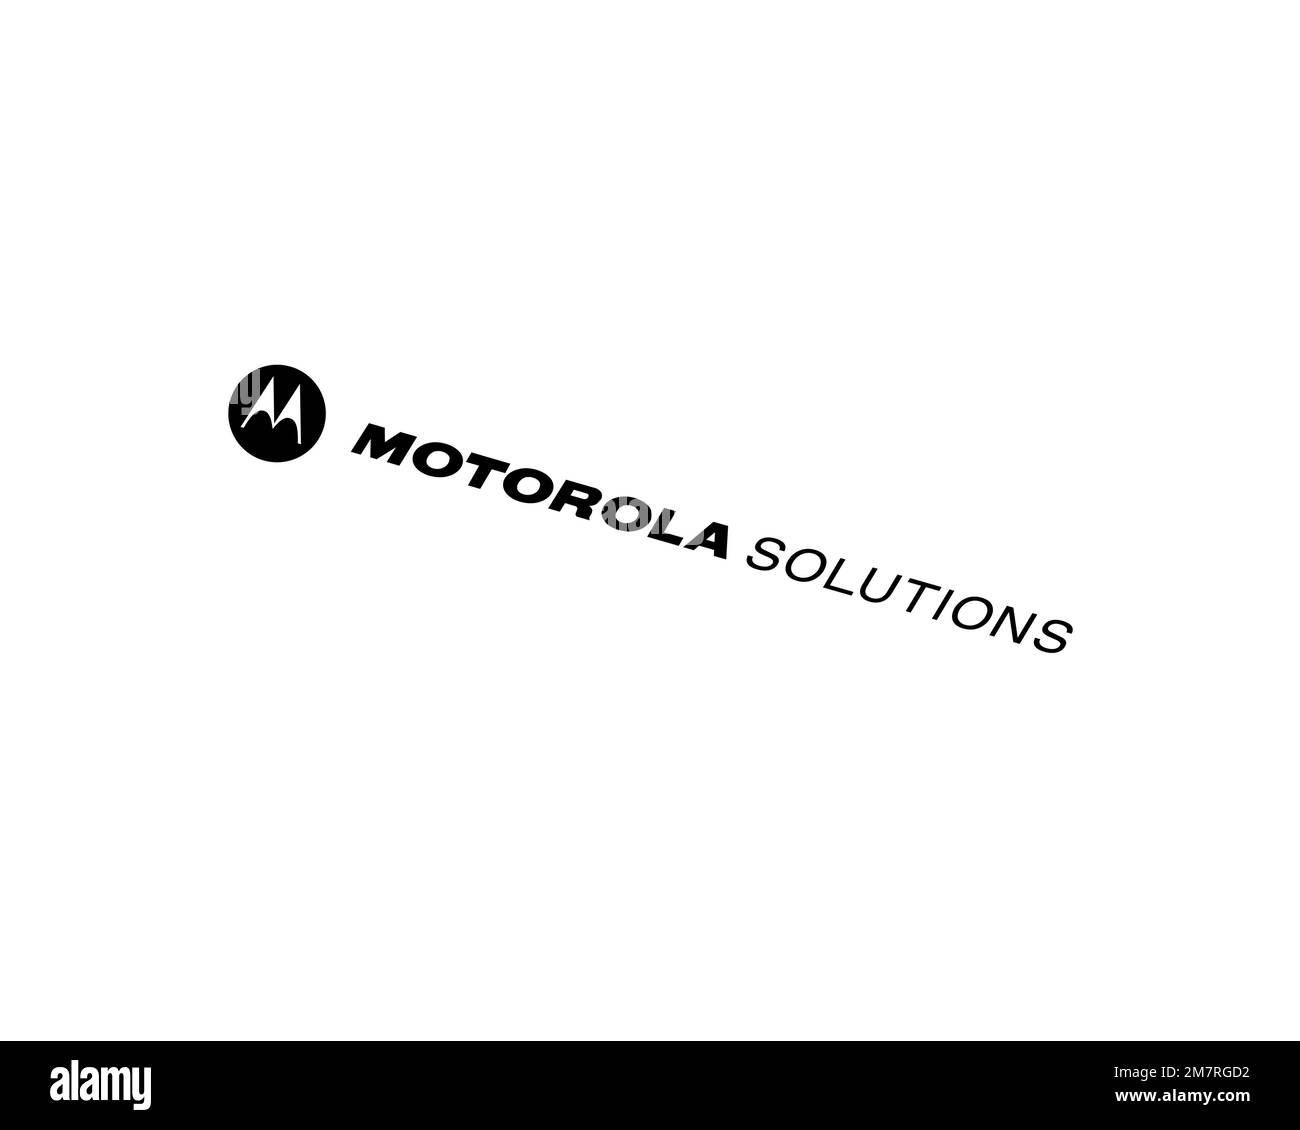 Motorola Solutions, logo ruotato, sfondo bianco B Foto Stock